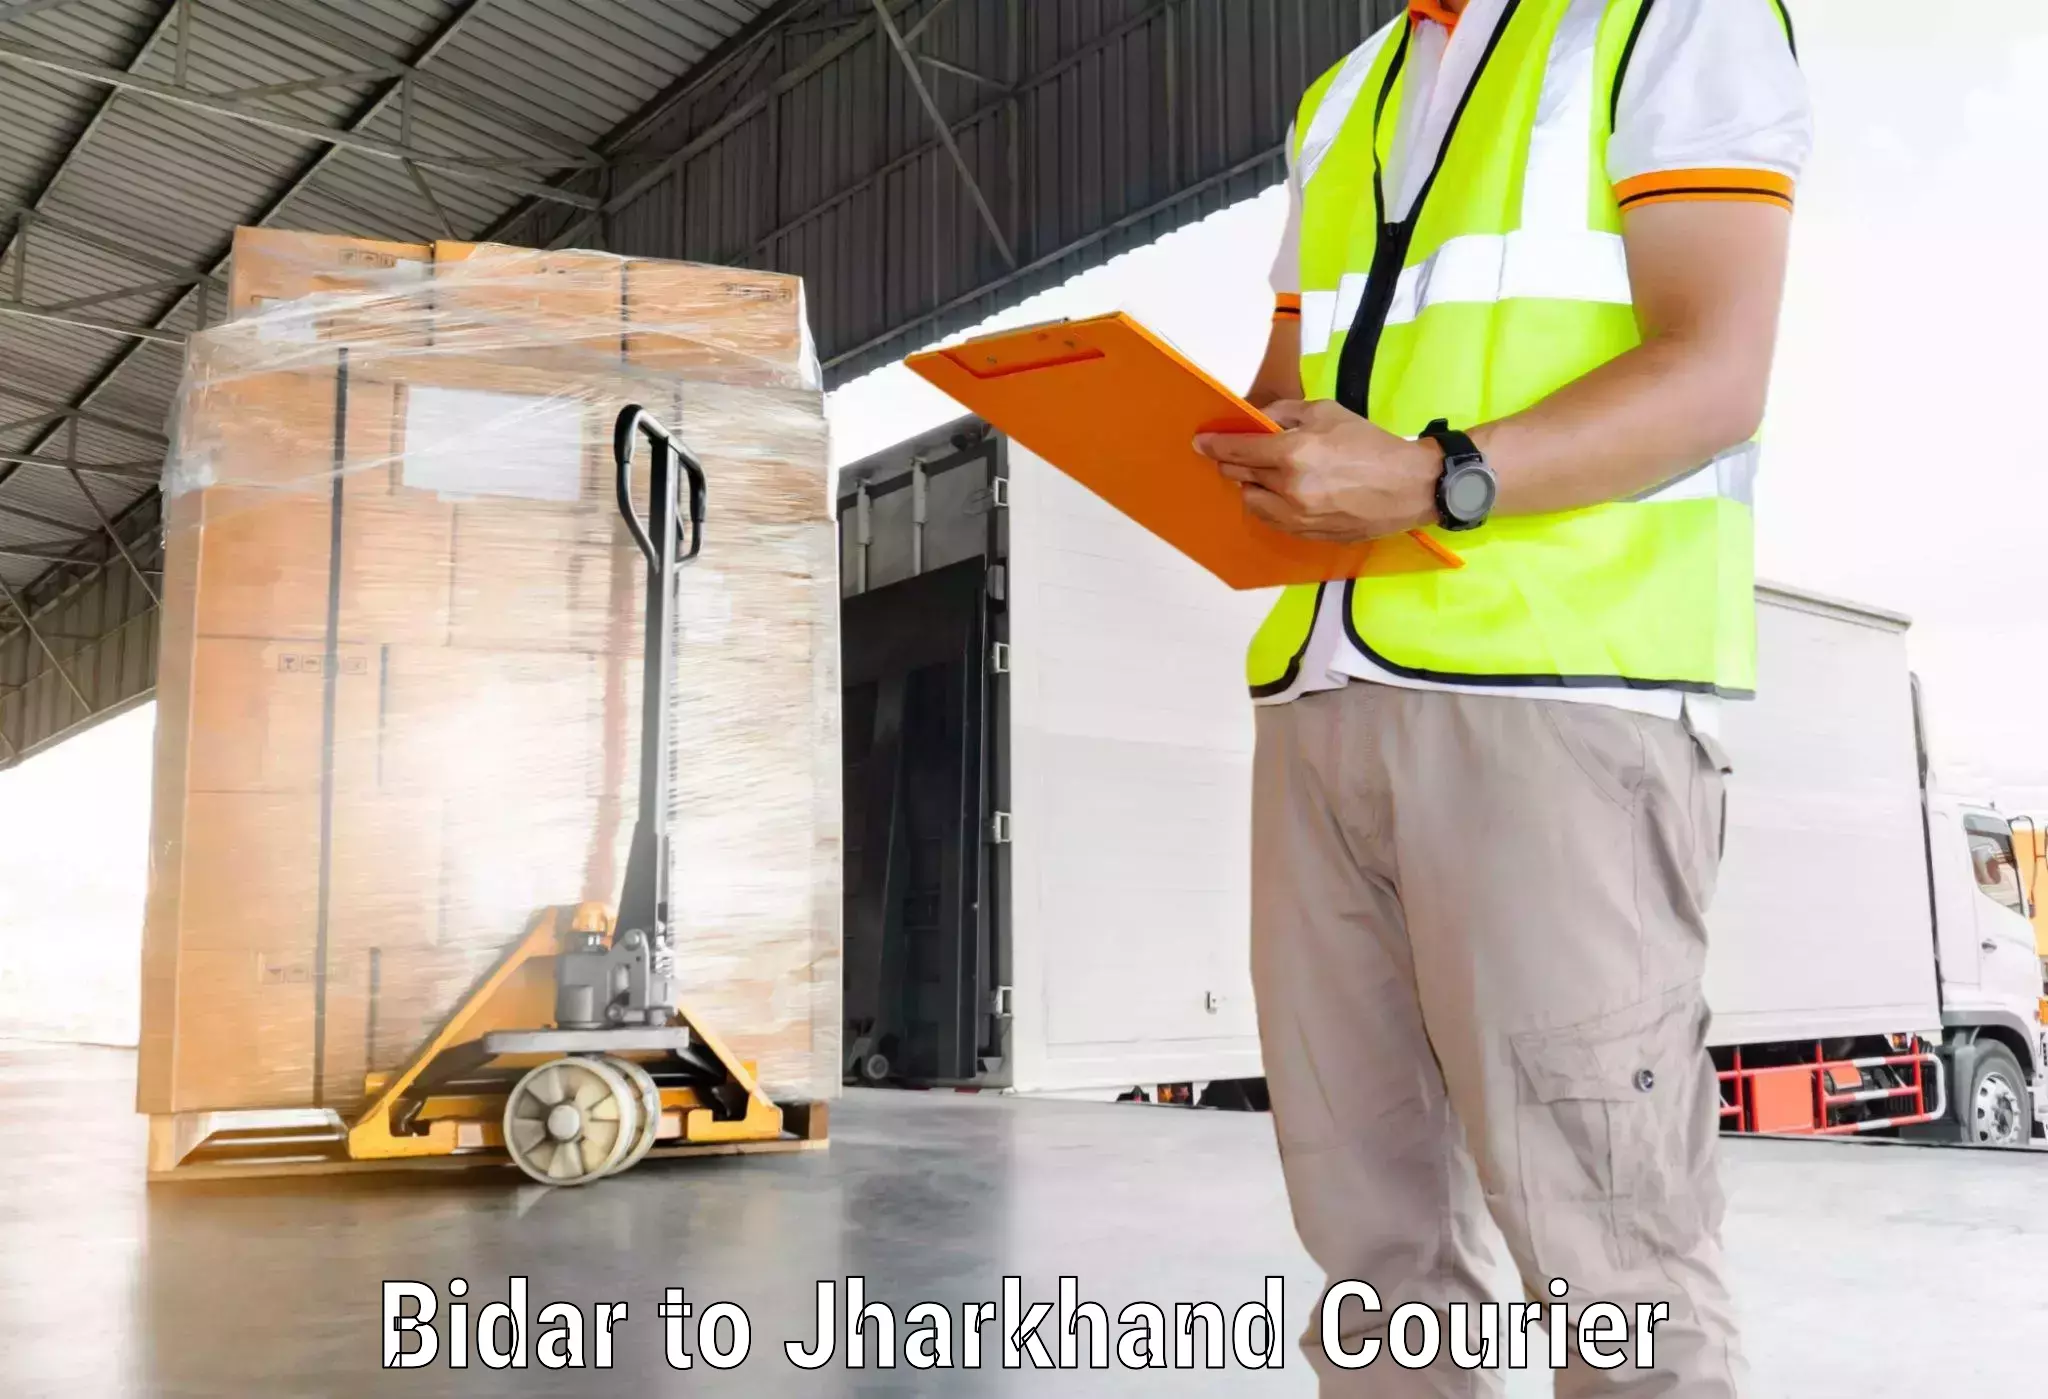 Courier service innovation Bidar to Chouparan